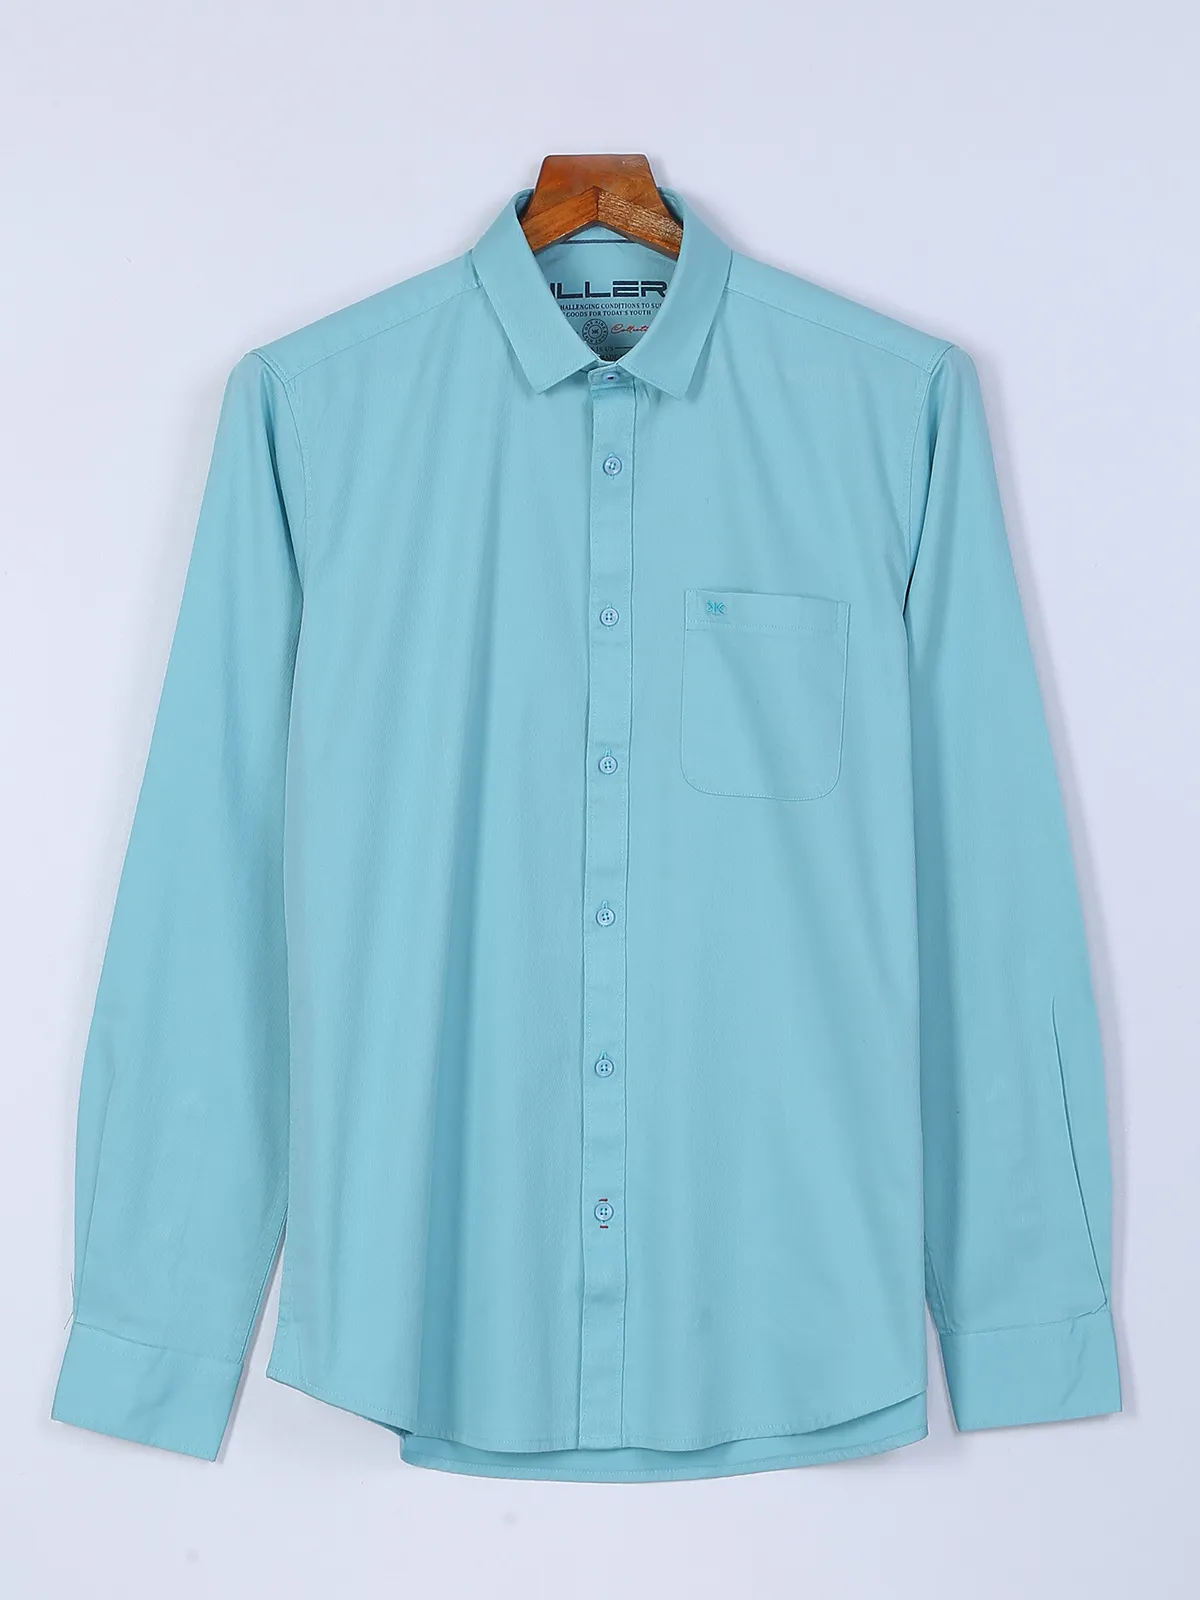 Killer light blue cotton plain shirt